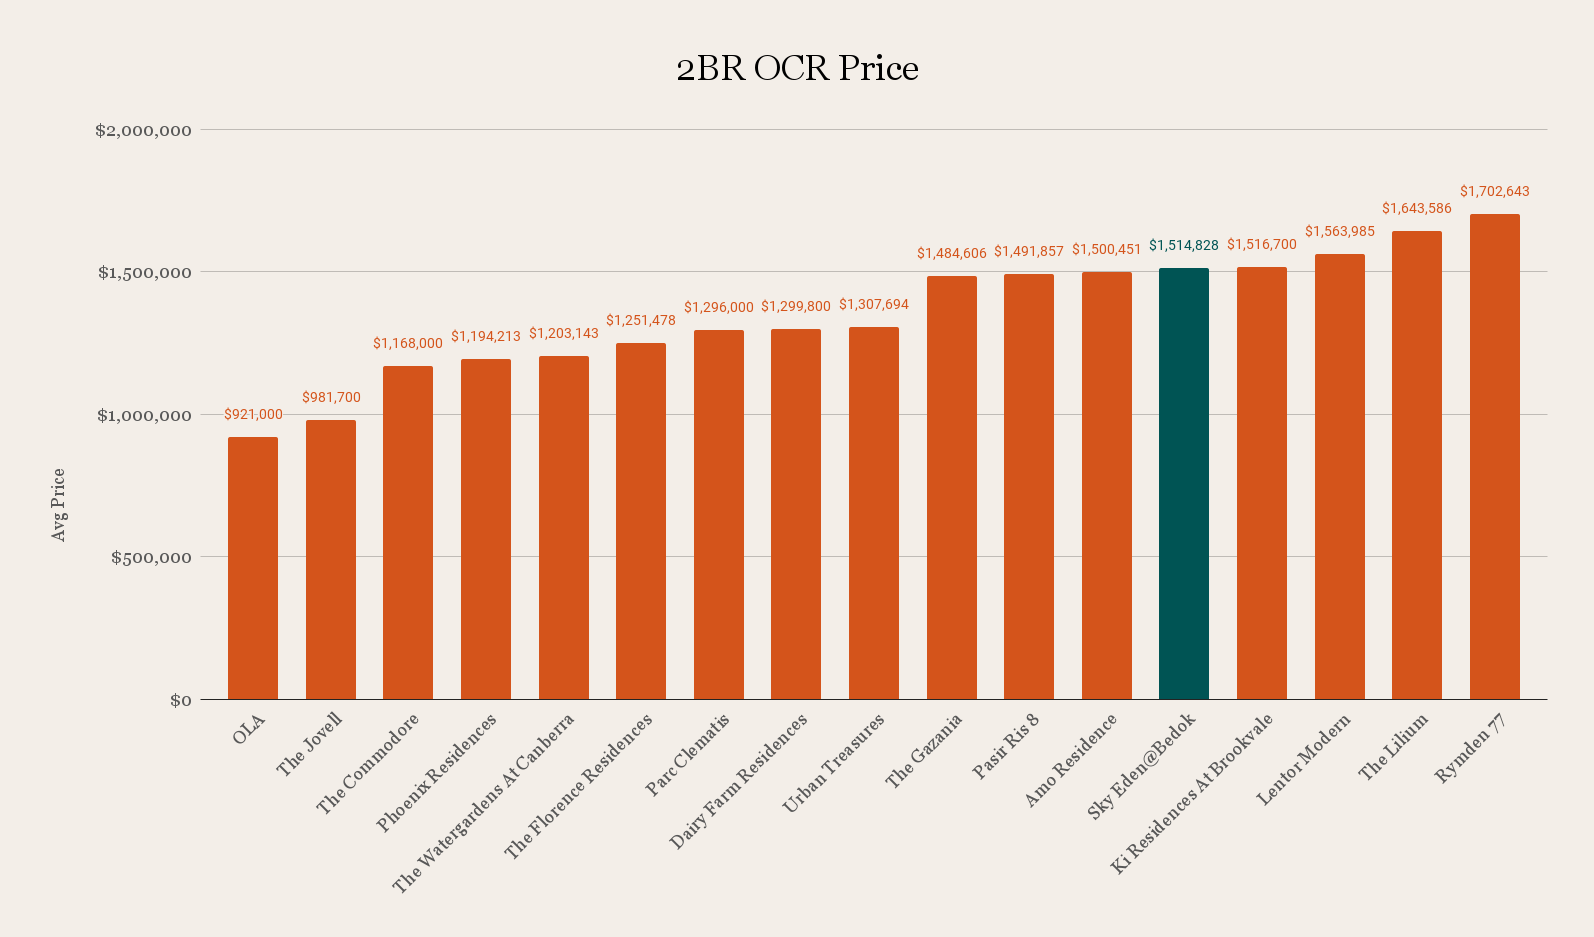 2BR OCR Price 1